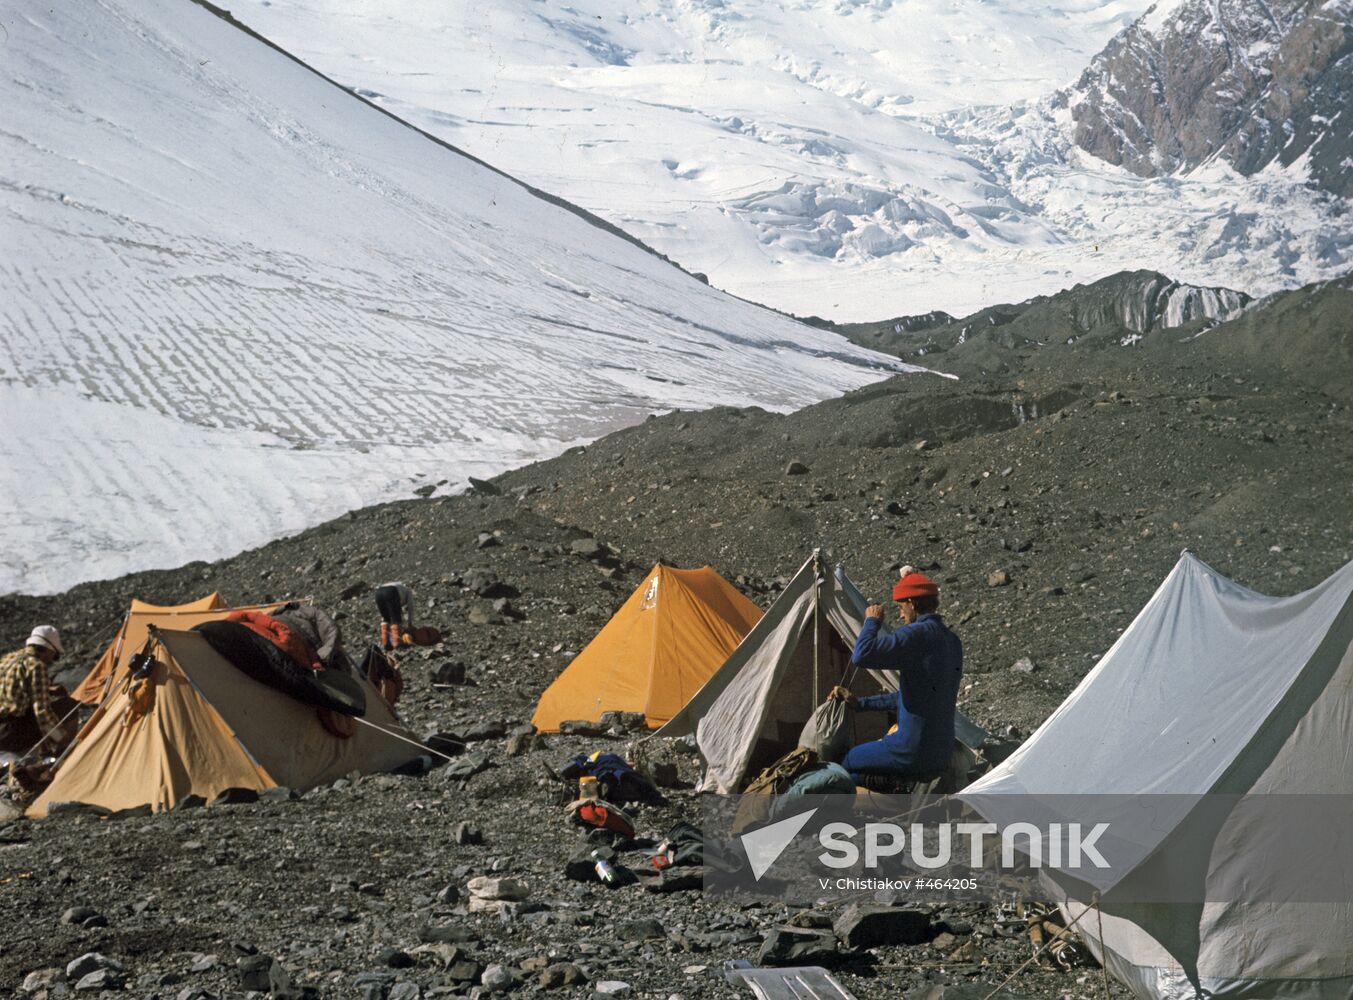 Mountain-climbers' camp beneath Lenin Peak